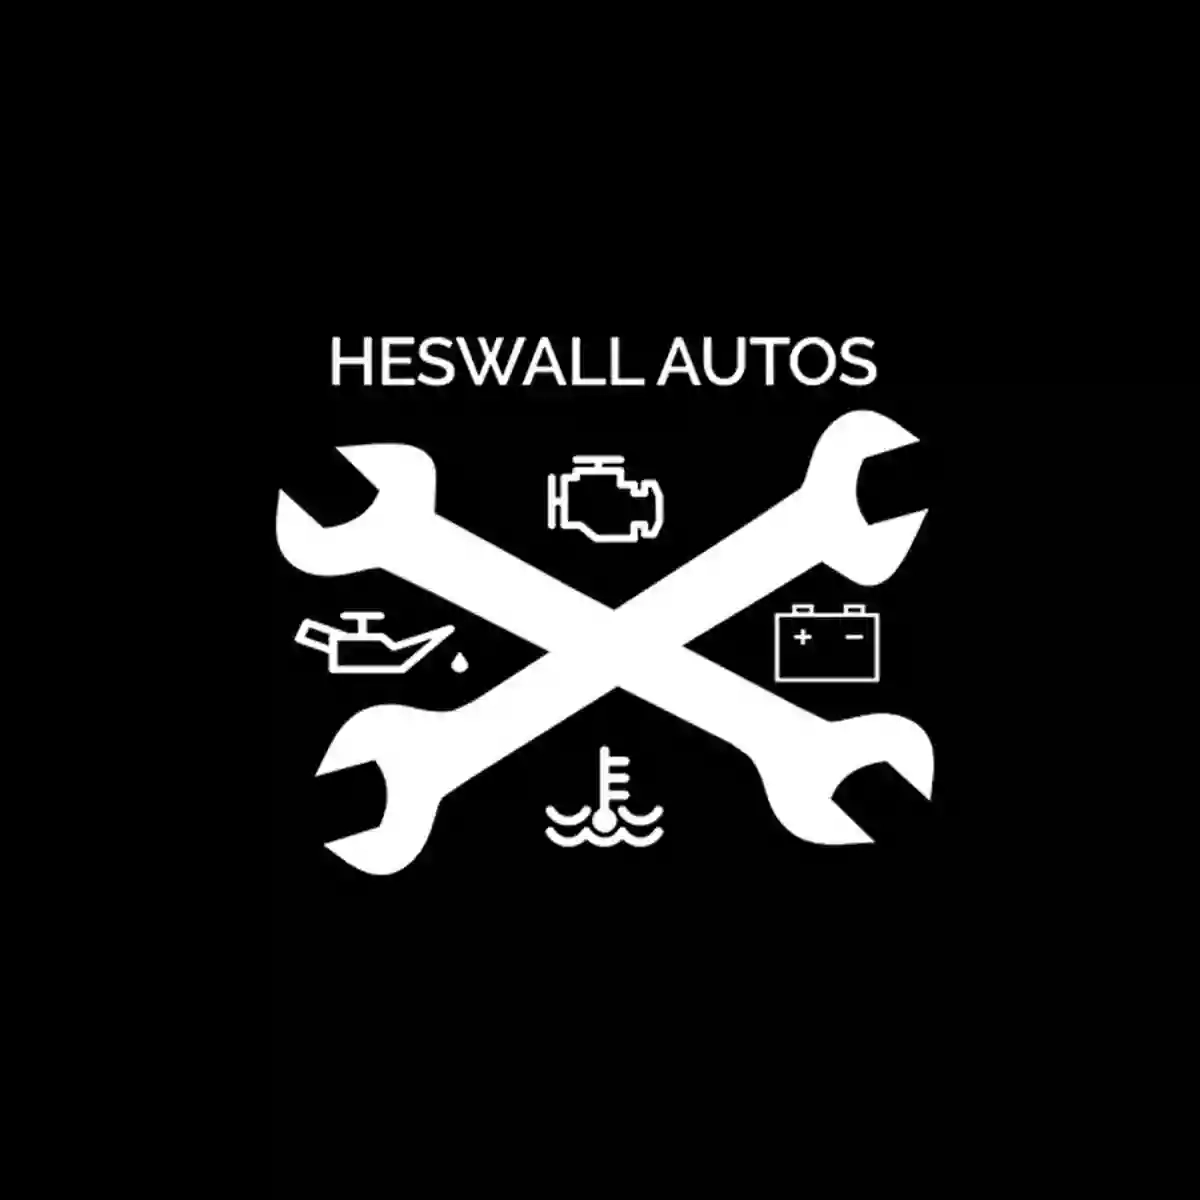 Heswall Autos